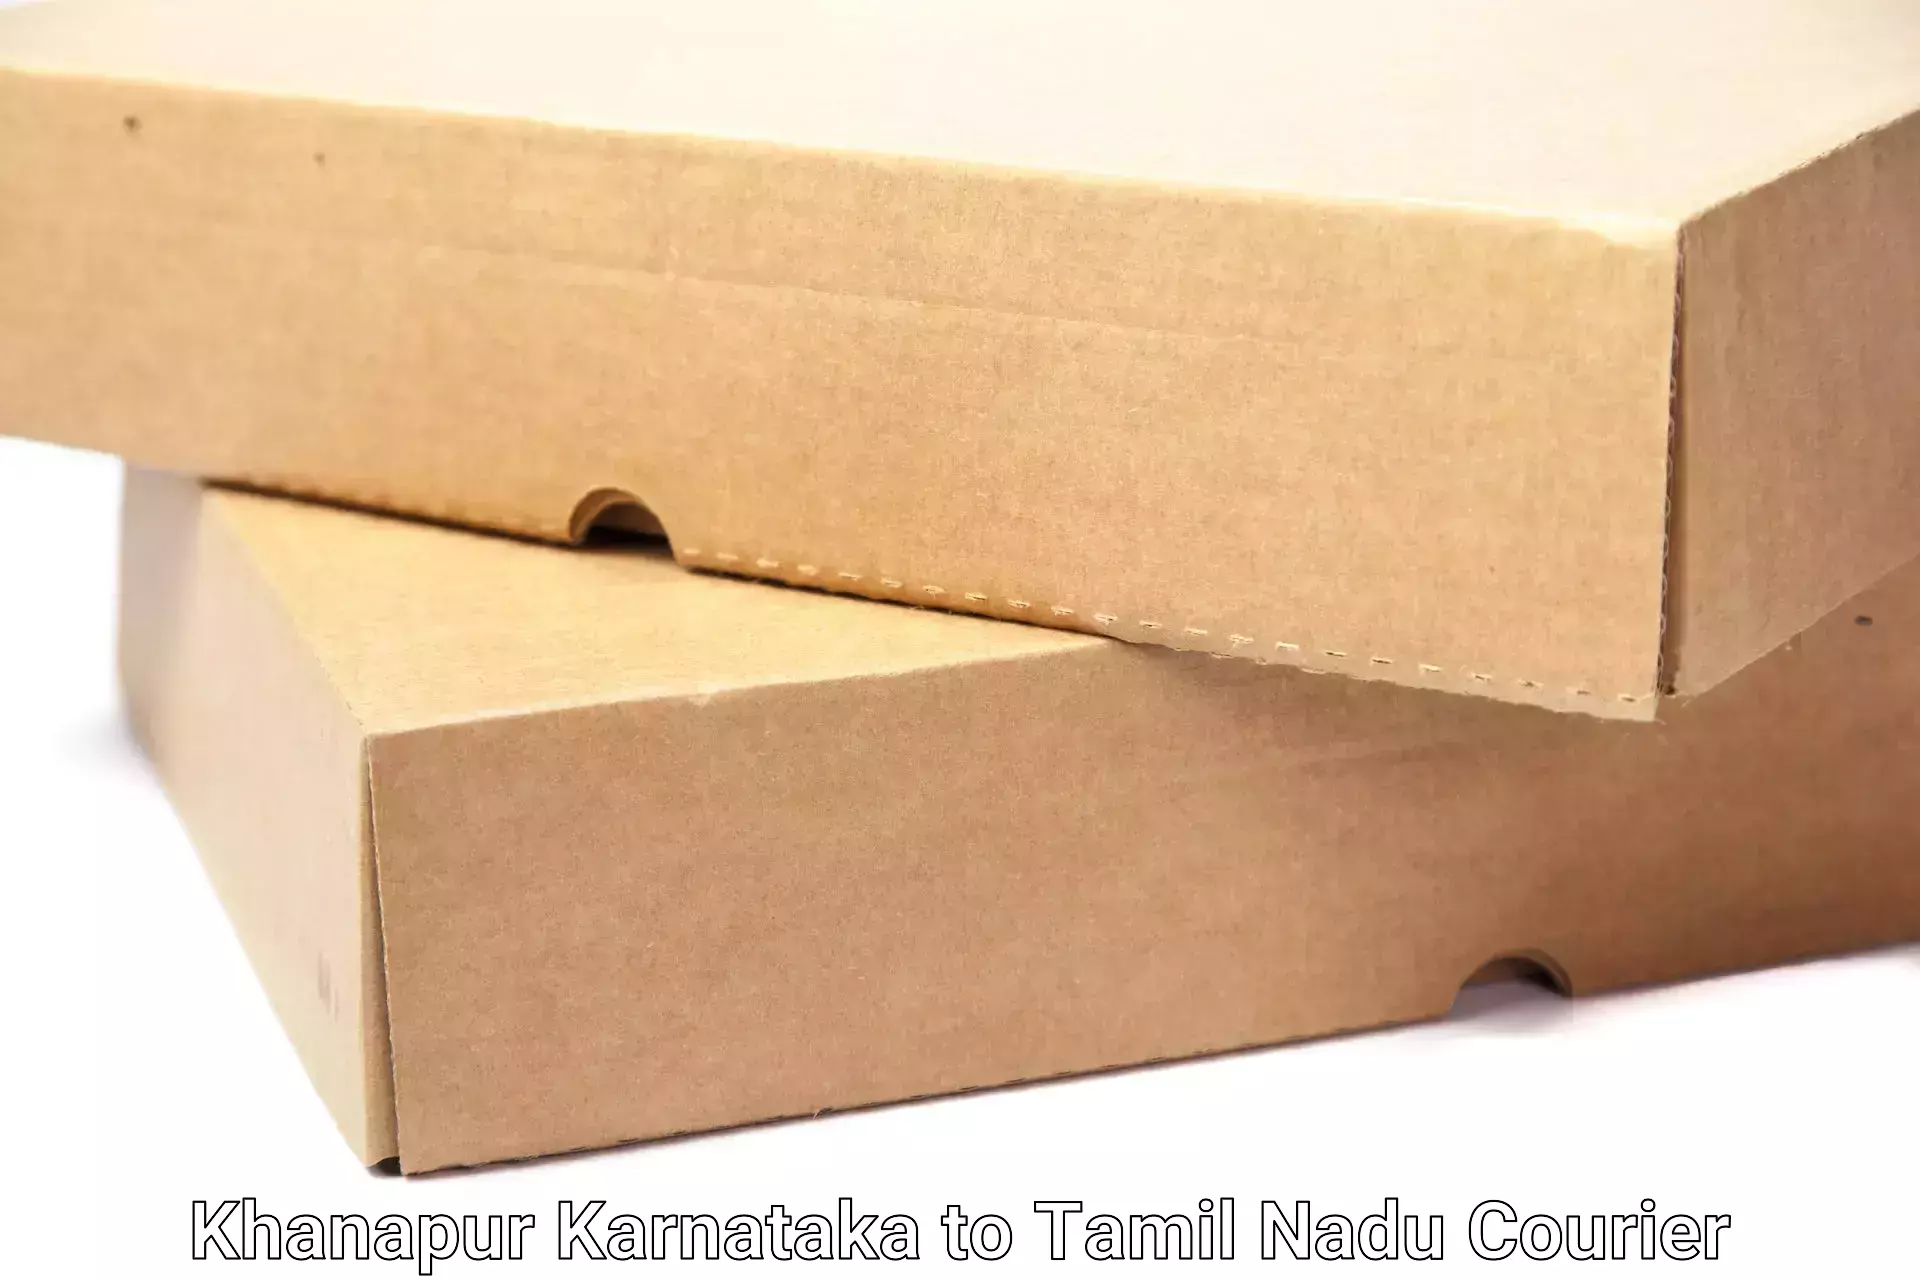 Seamless moving process Khanapur Karnataka to Thiruthuraipoondi